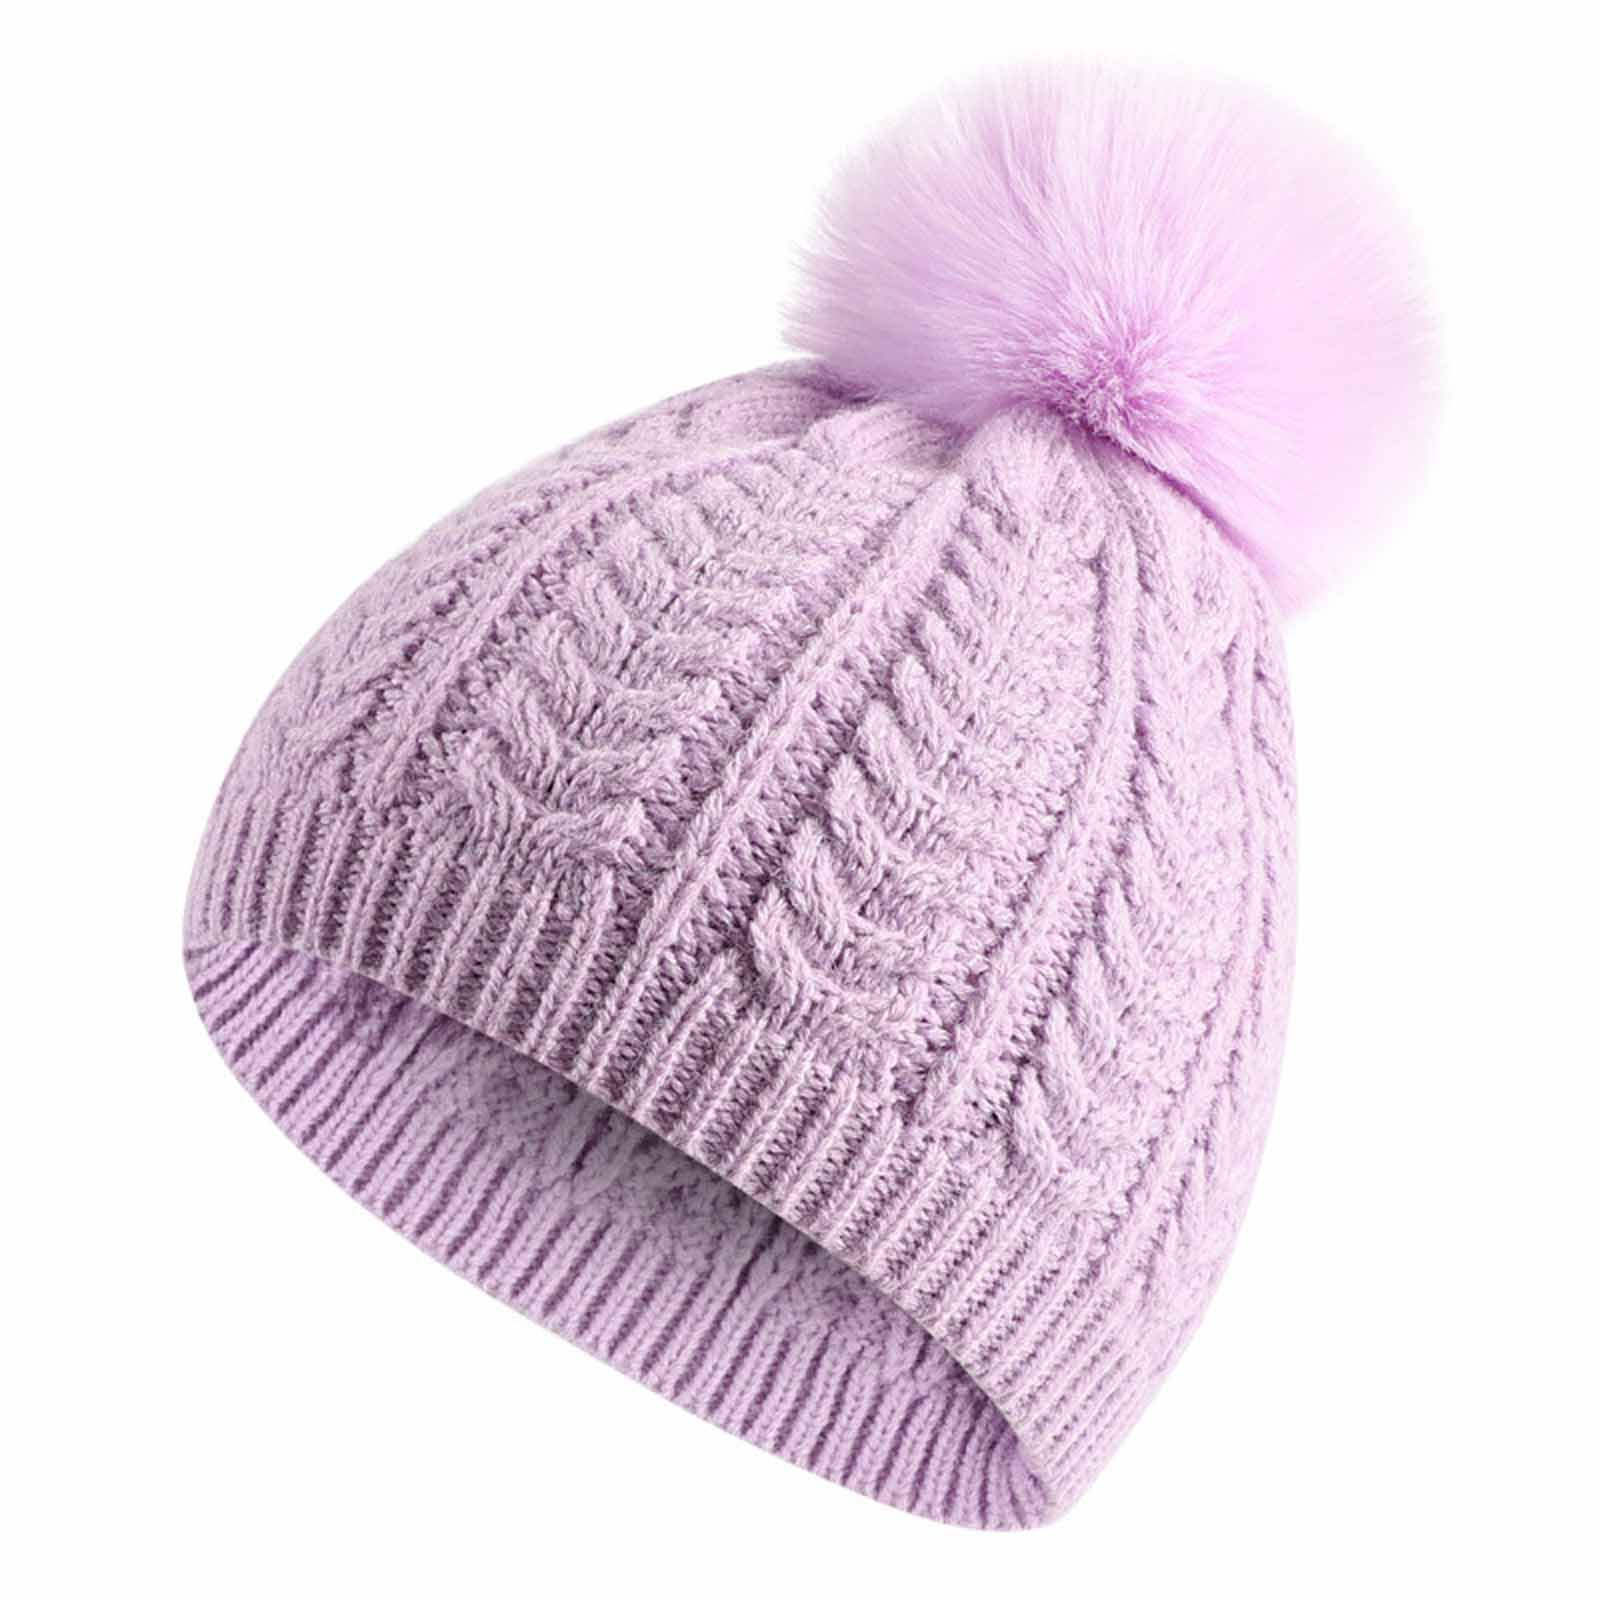 Lolmot Newborn Toddler Kids Winter Warm Fleece Beanie Hats Thick Warm Pompom Crochet Hairball Knit Cap - image 1 of 2